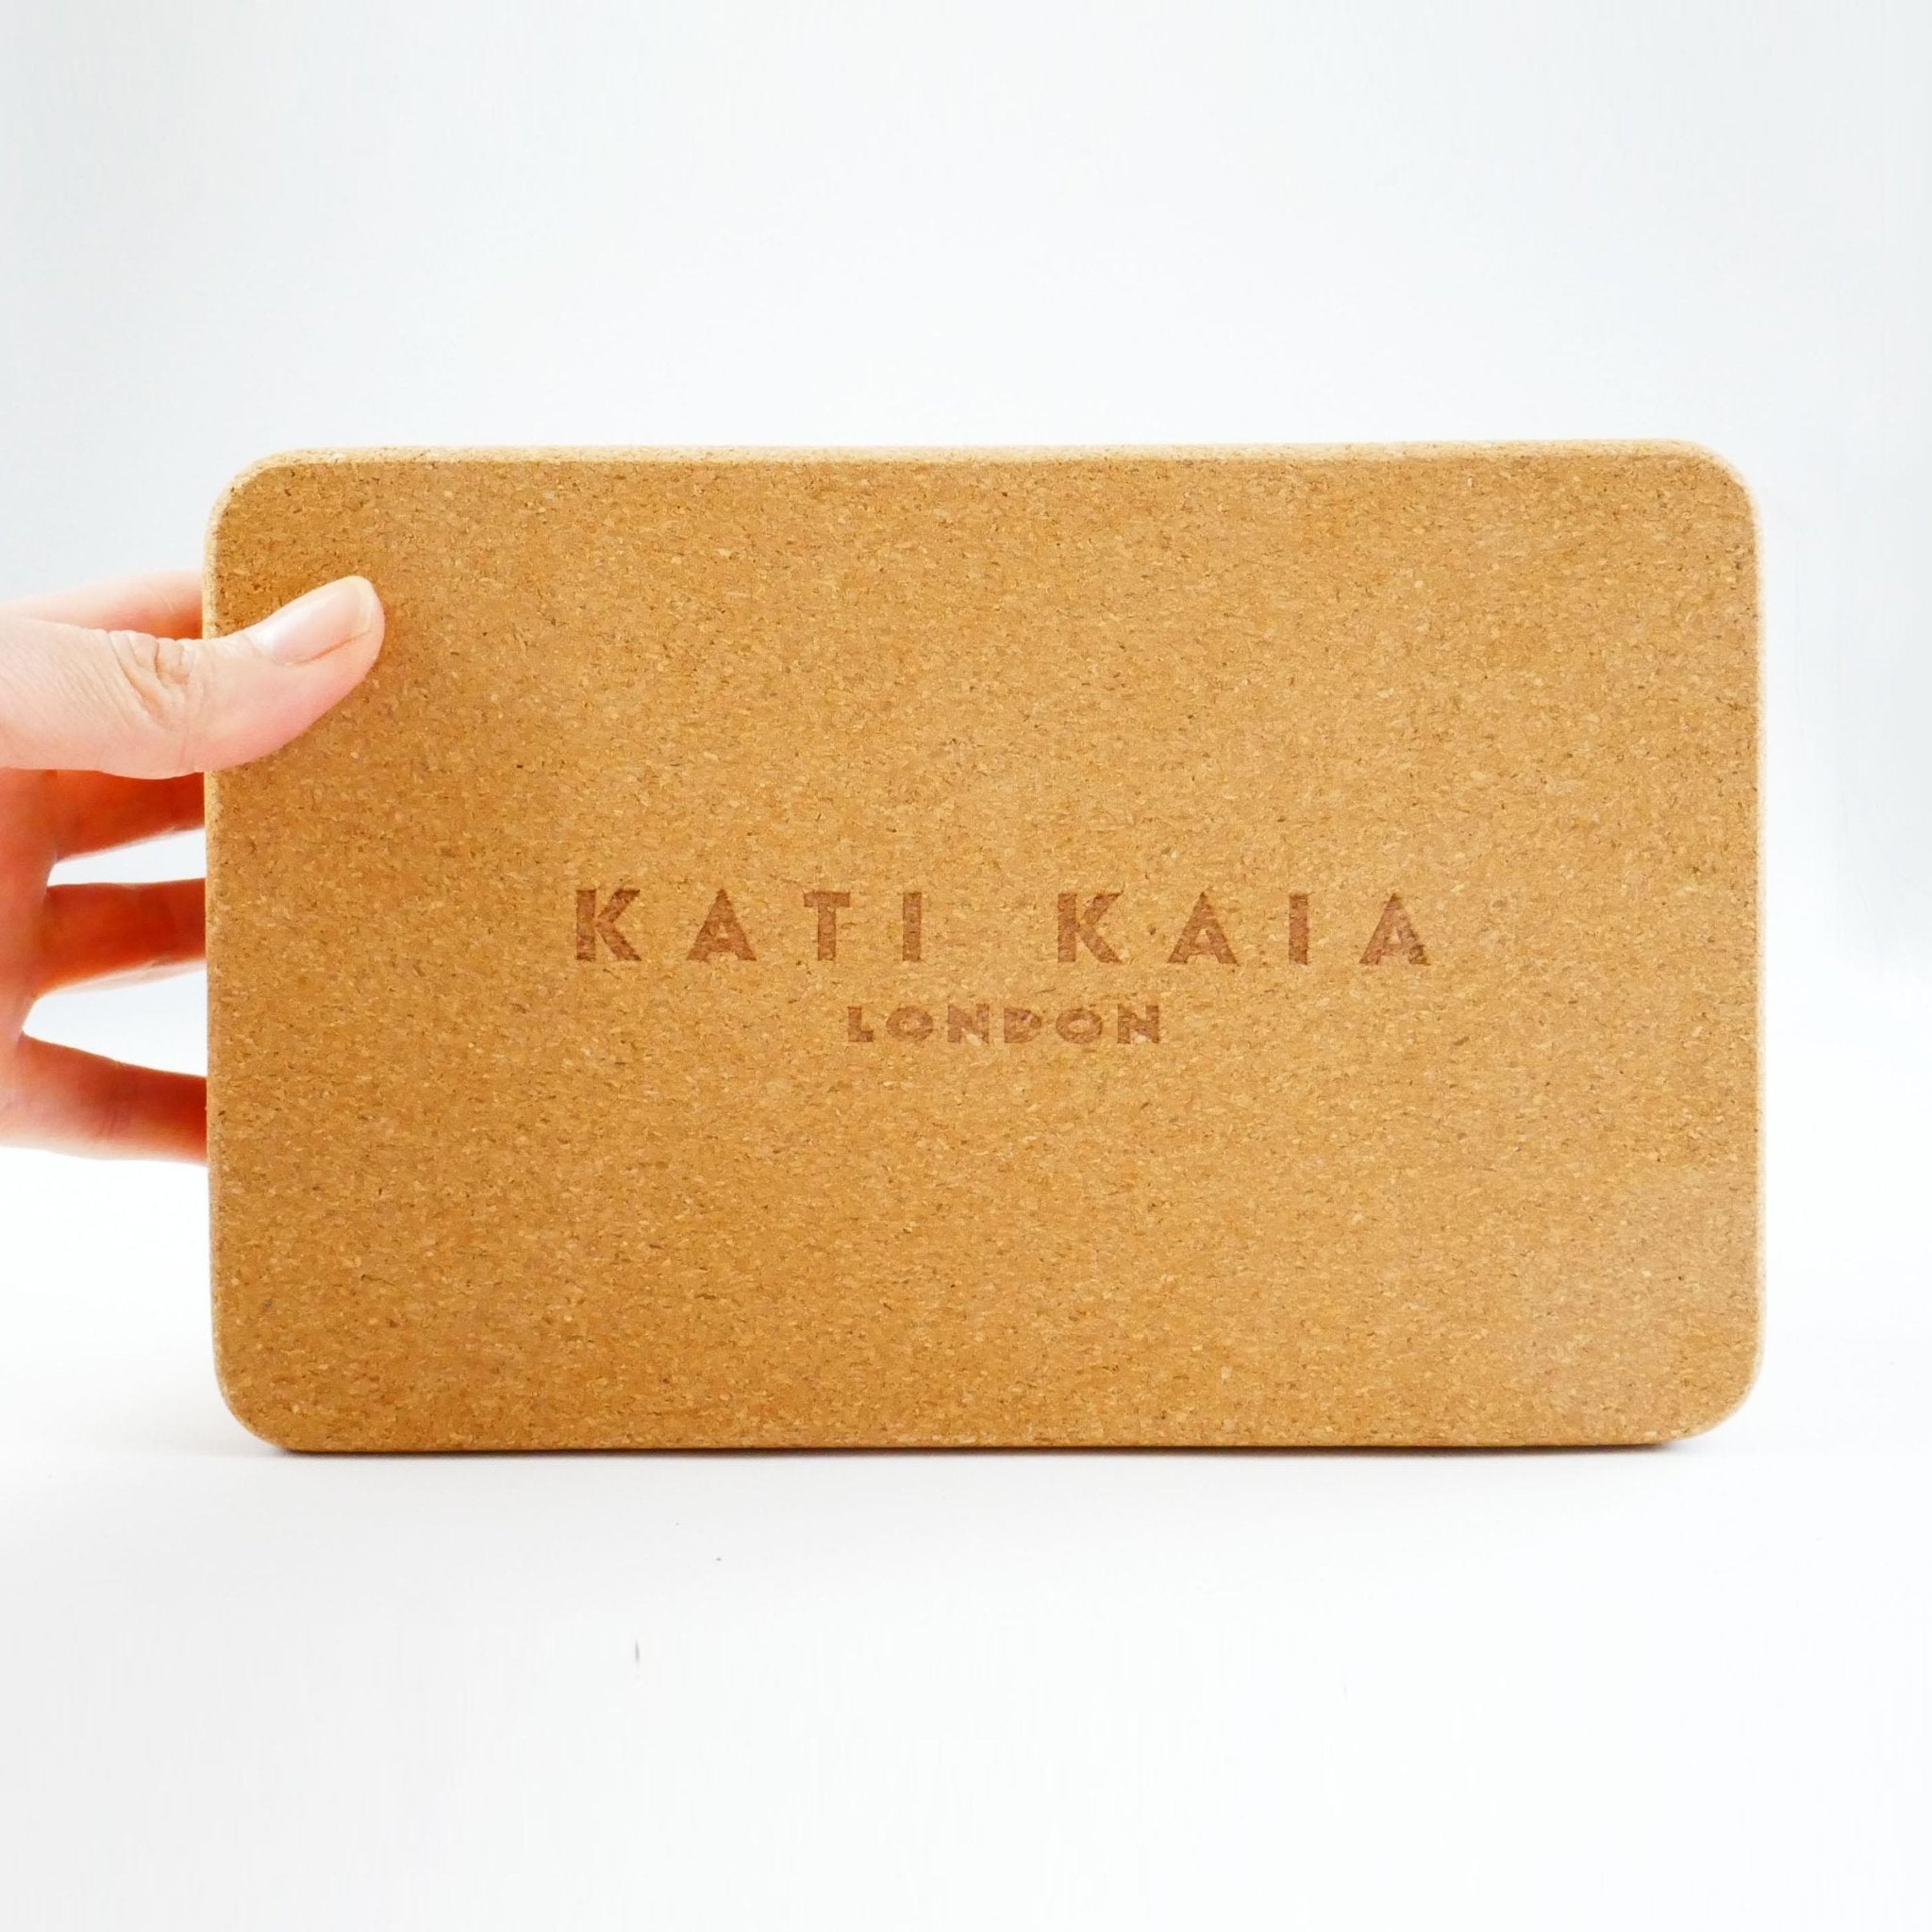 Starter Kit - Gallery 4.5 mm - Home + Studio - Kati Kaia - UK